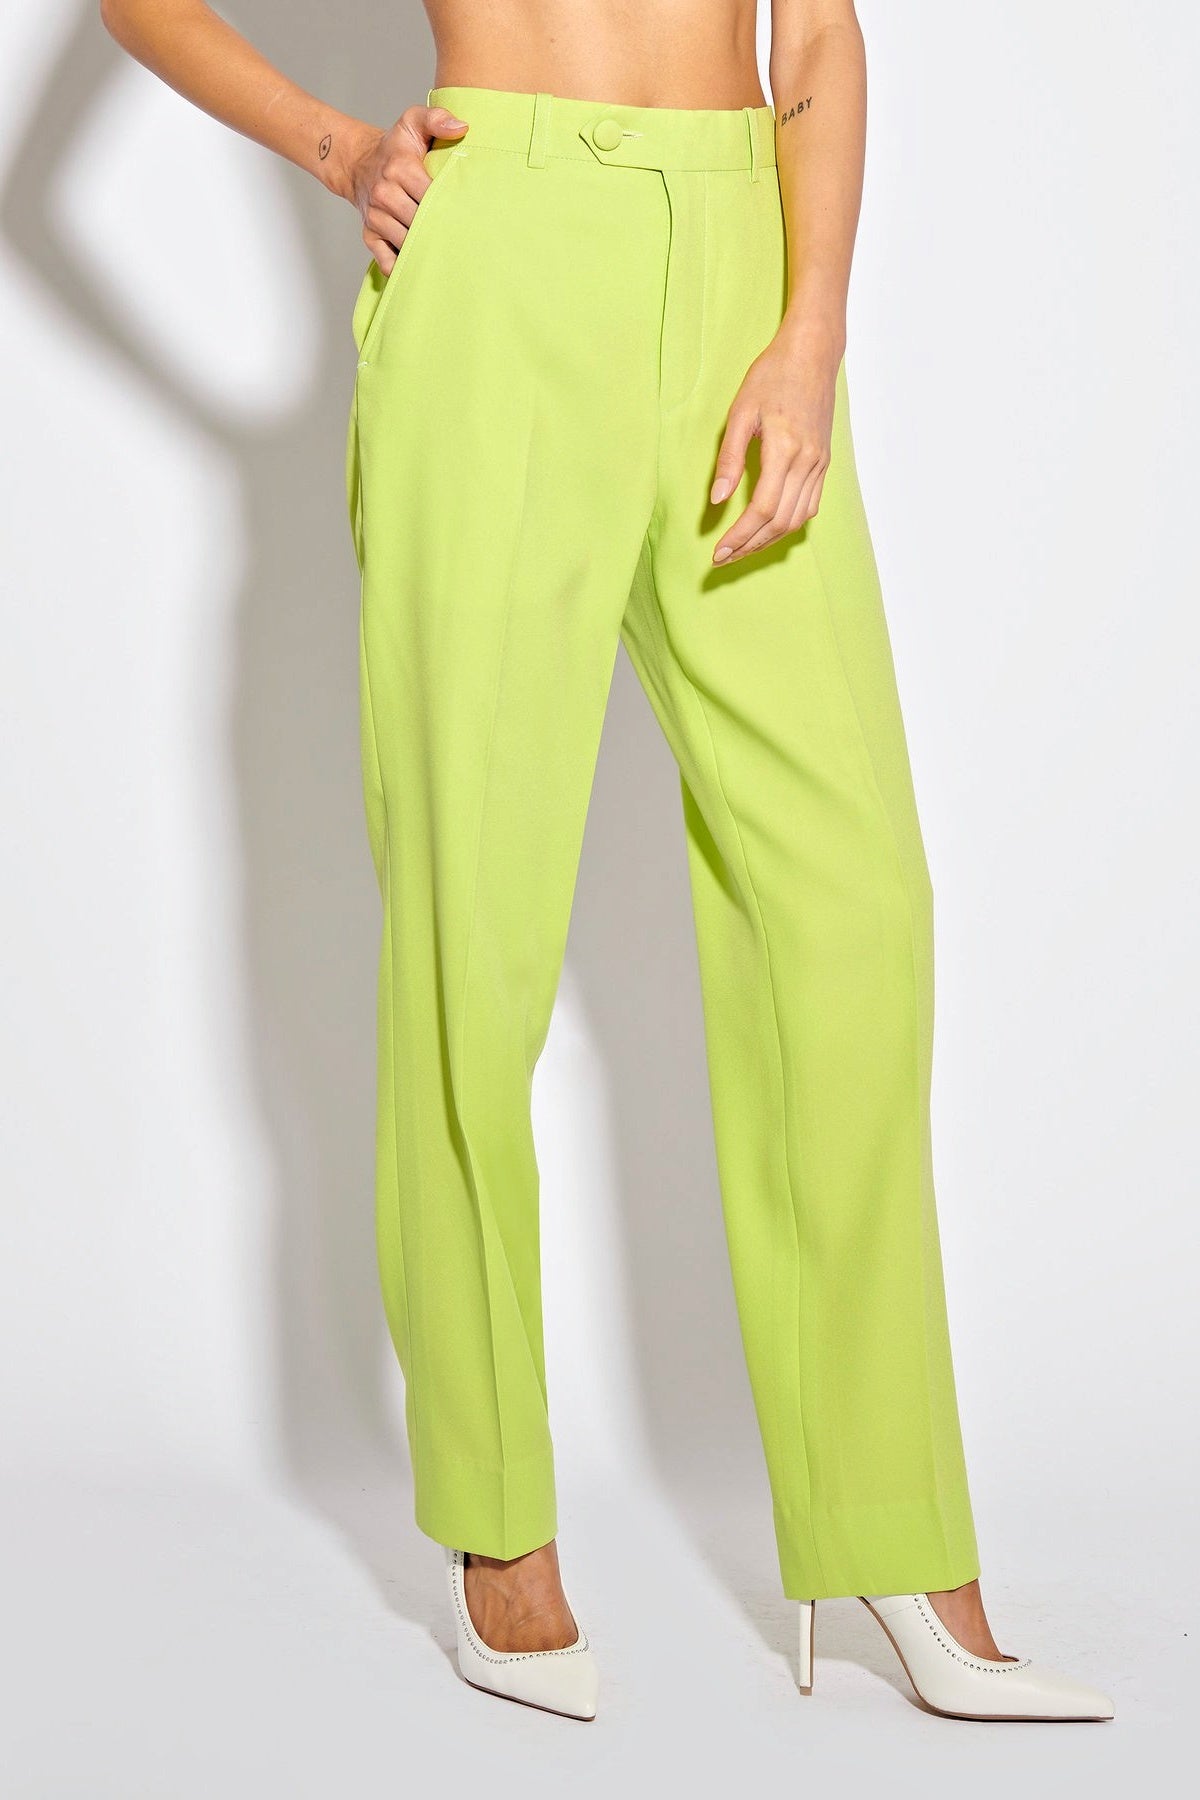 Lime Green Pants- Wide-Leg Pants - High-Waisted Green Pants - Lulus